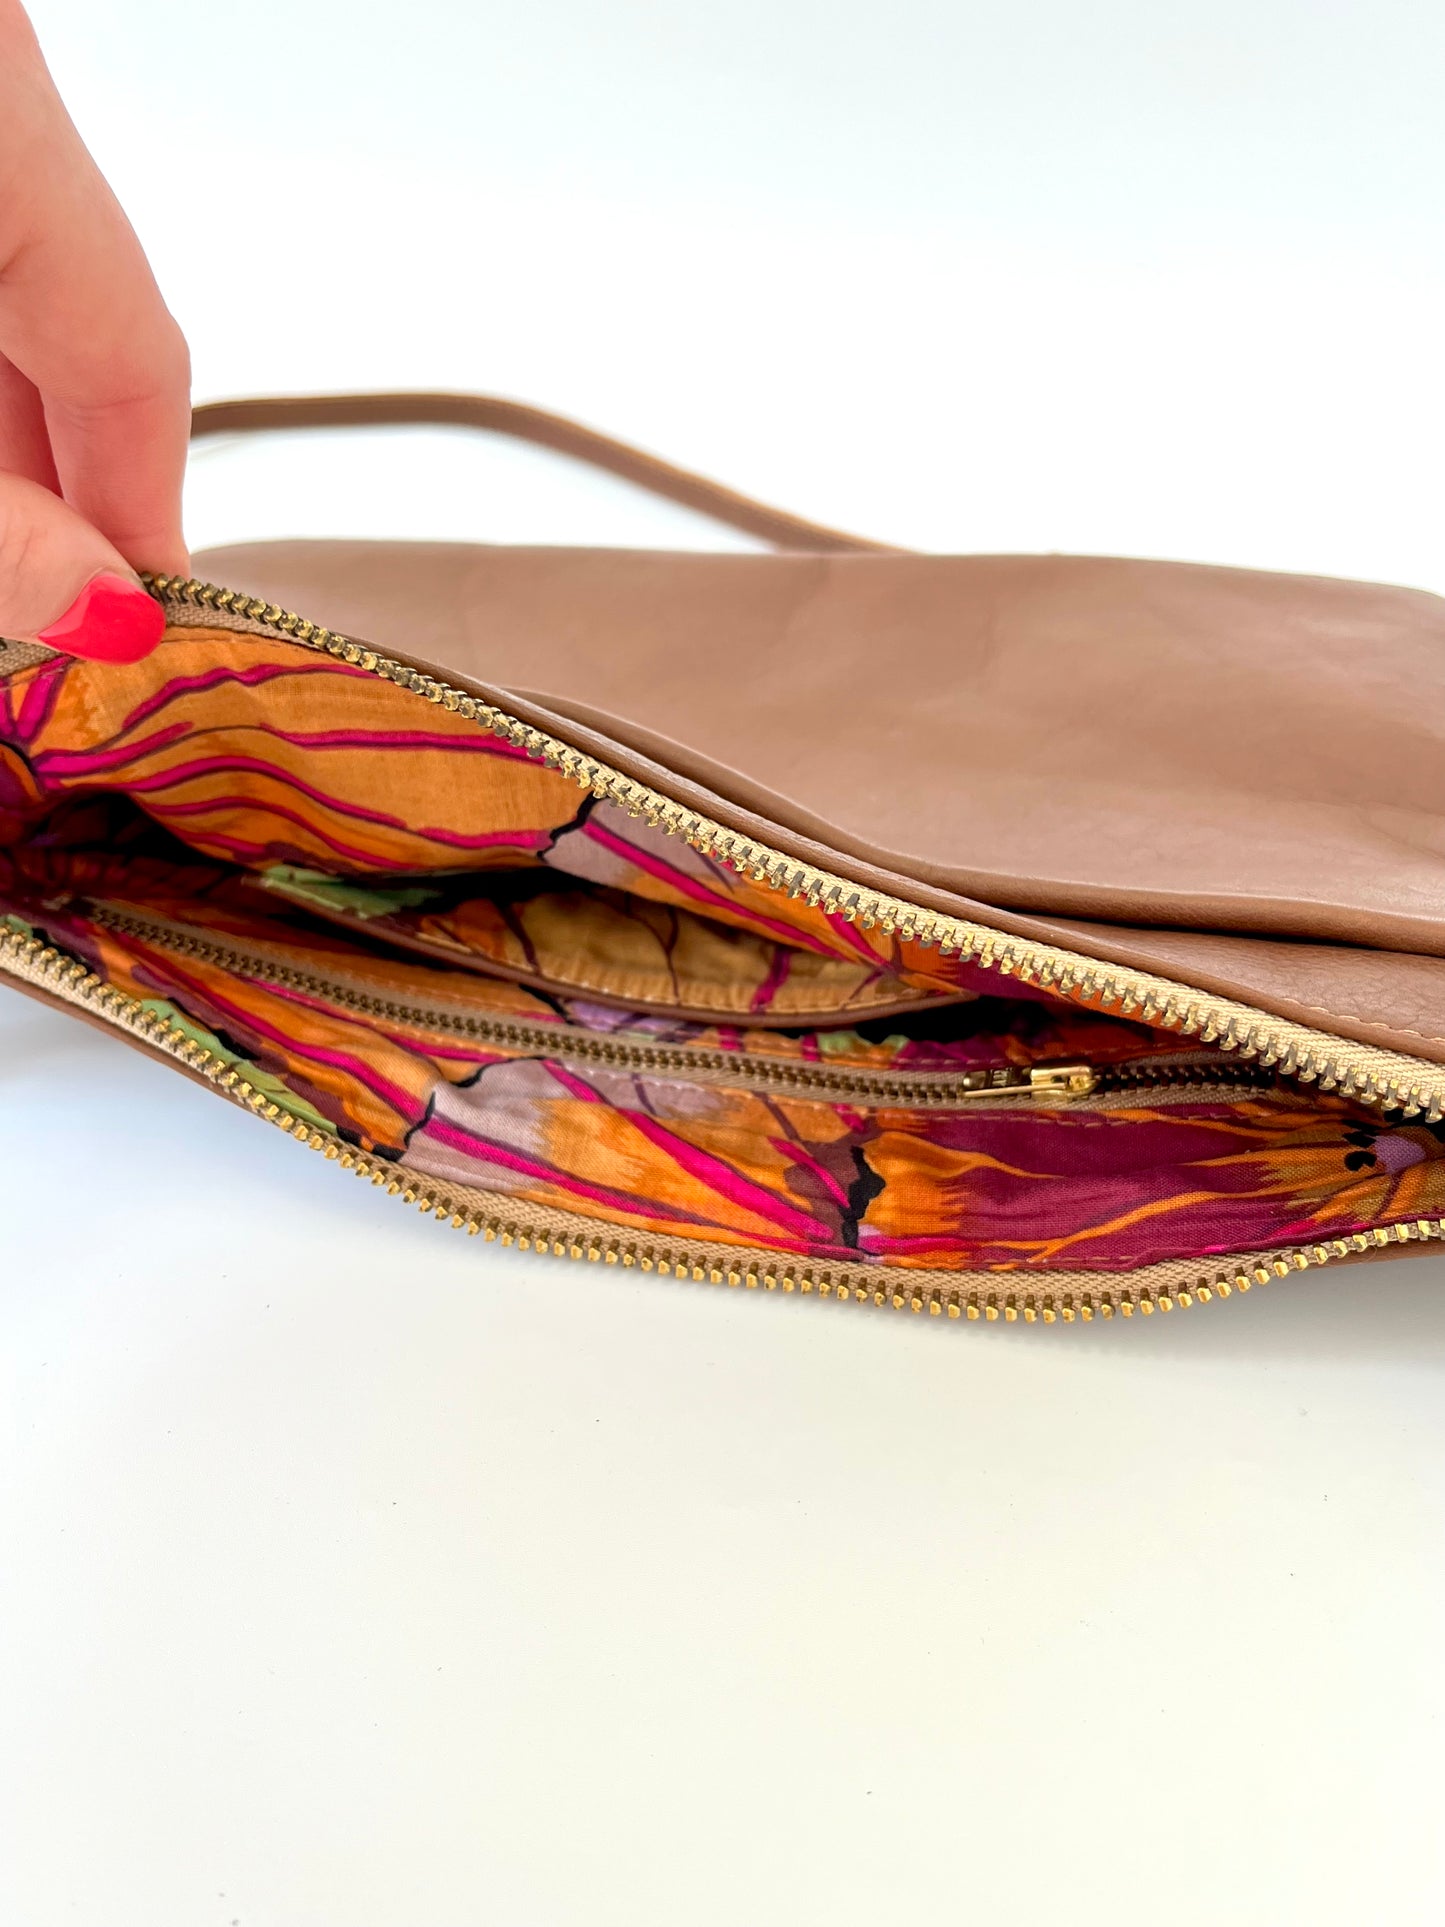 Obtuse Bag with Back Pocket - Chestnut Leather, Water Lily Lining